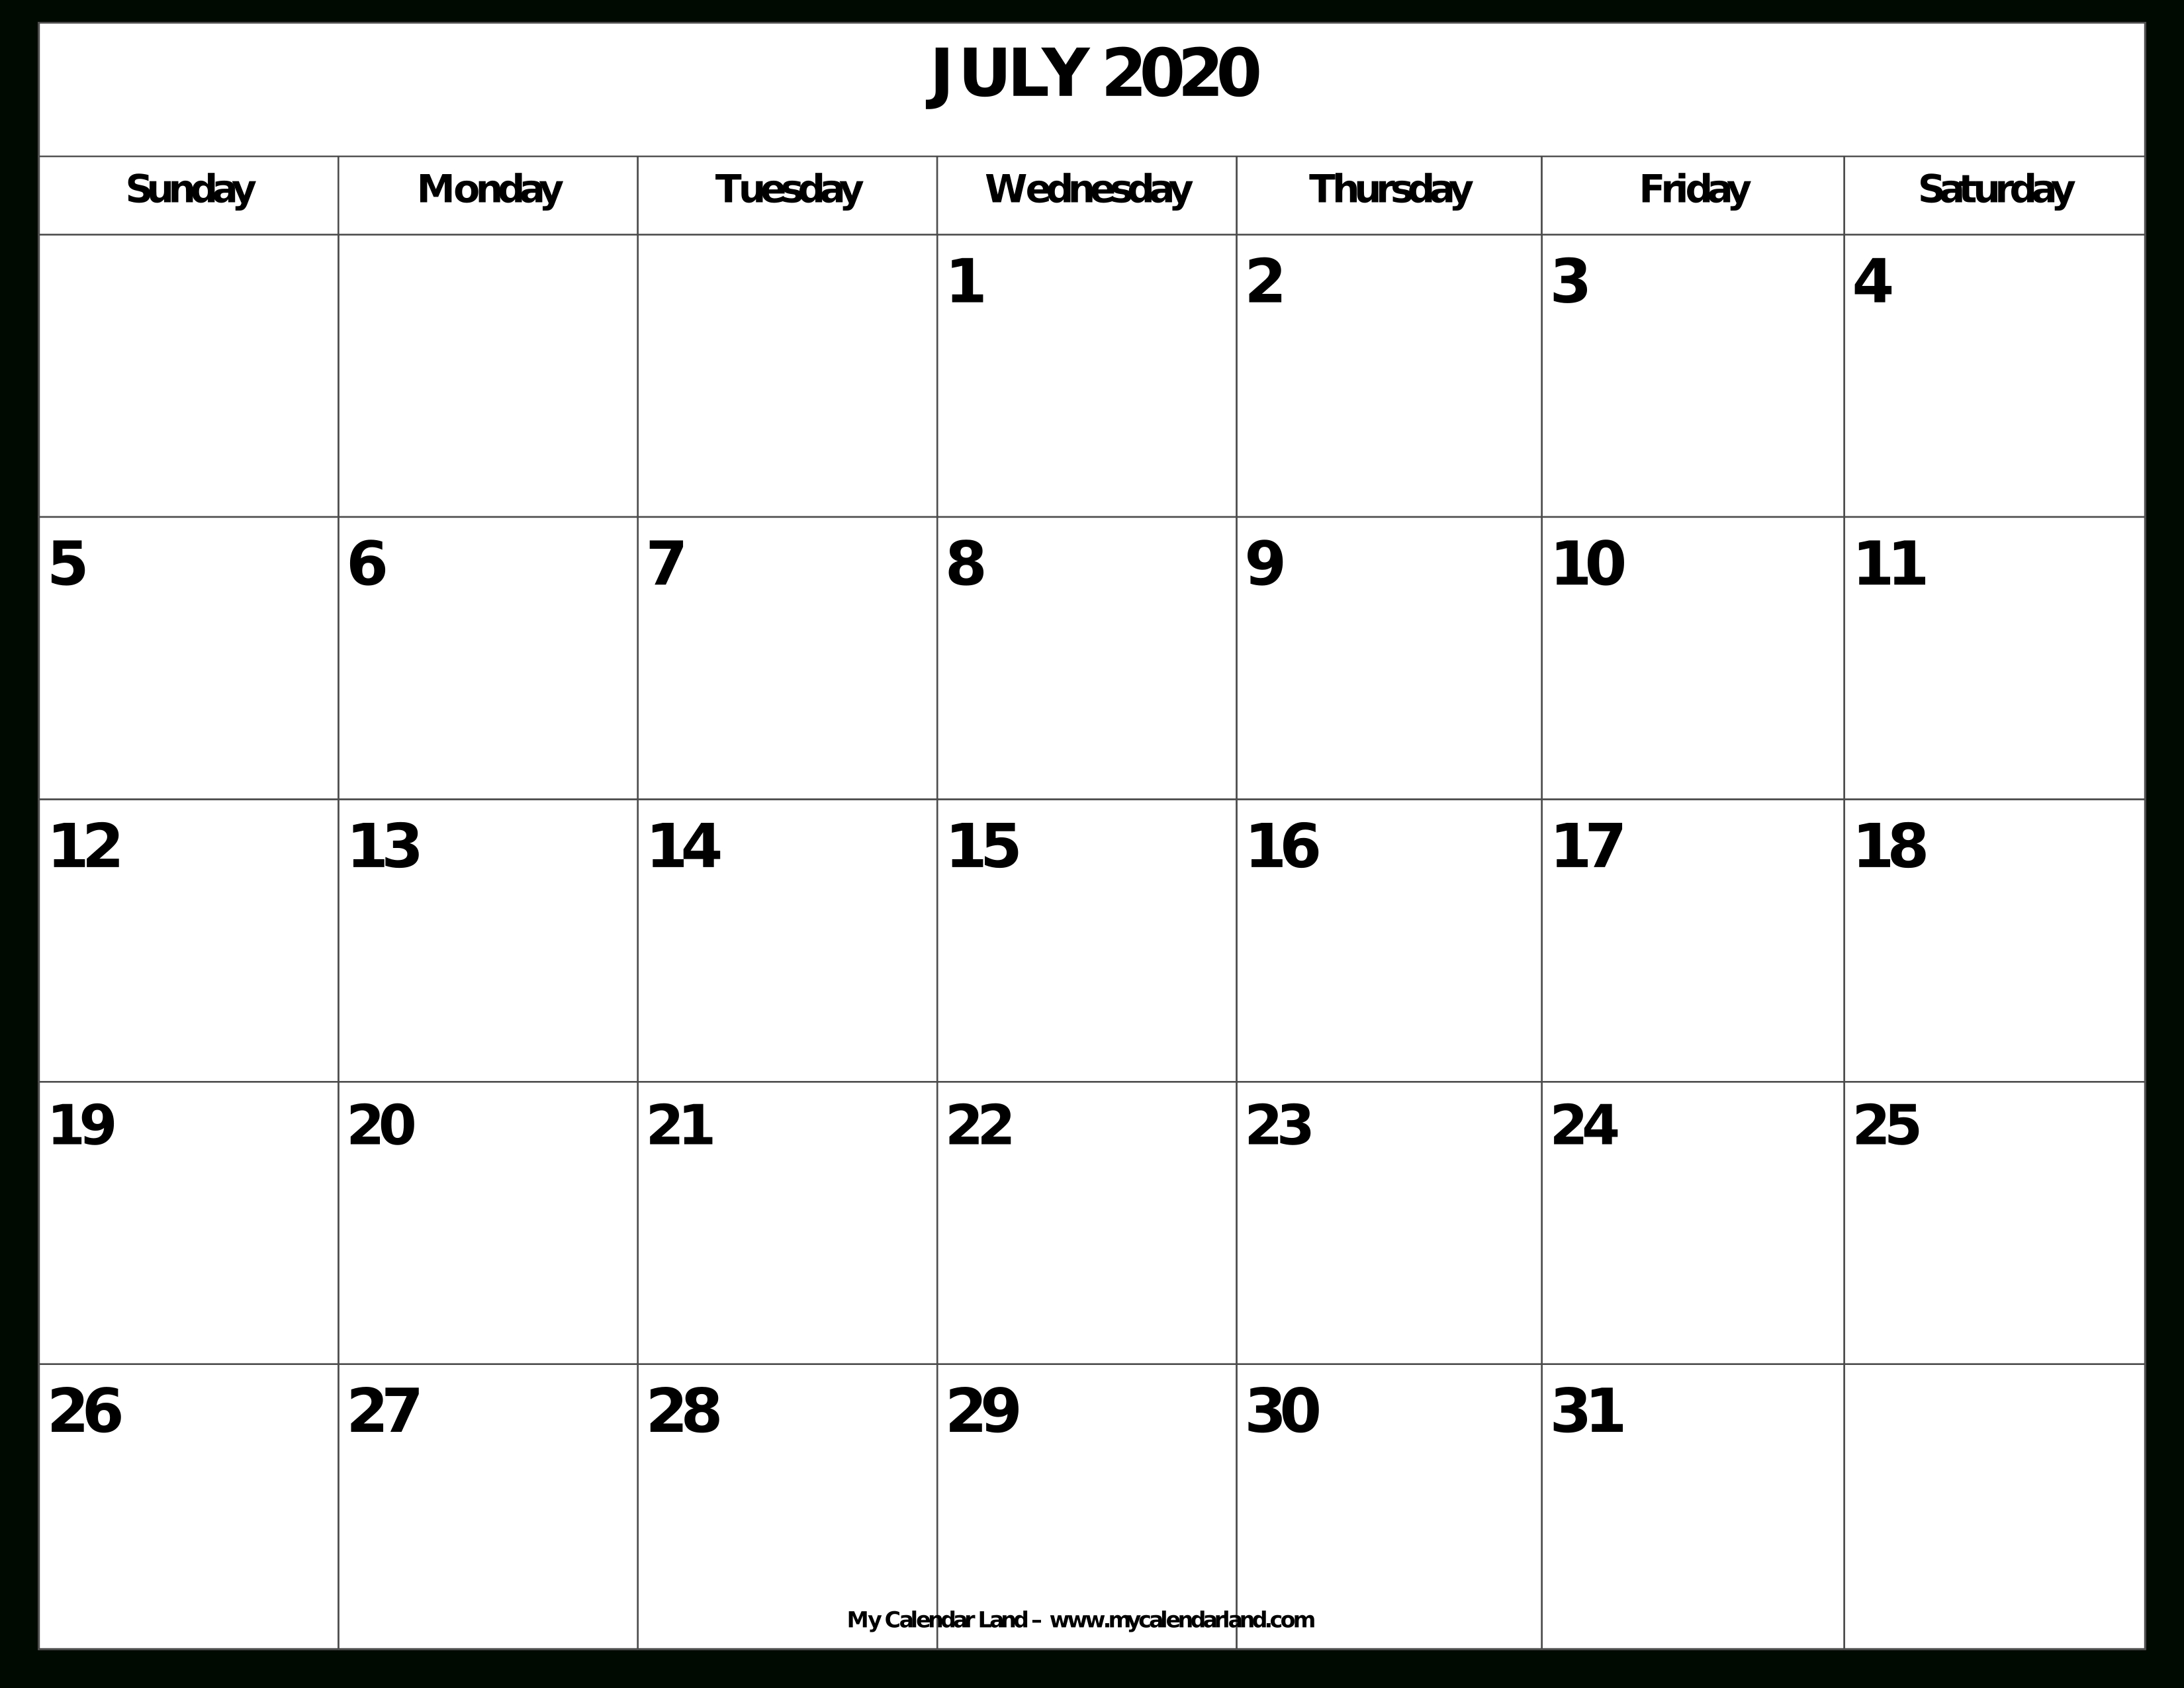 July 2021 Calendar - My Calendar Land July 2020 To July 2021 Calendar